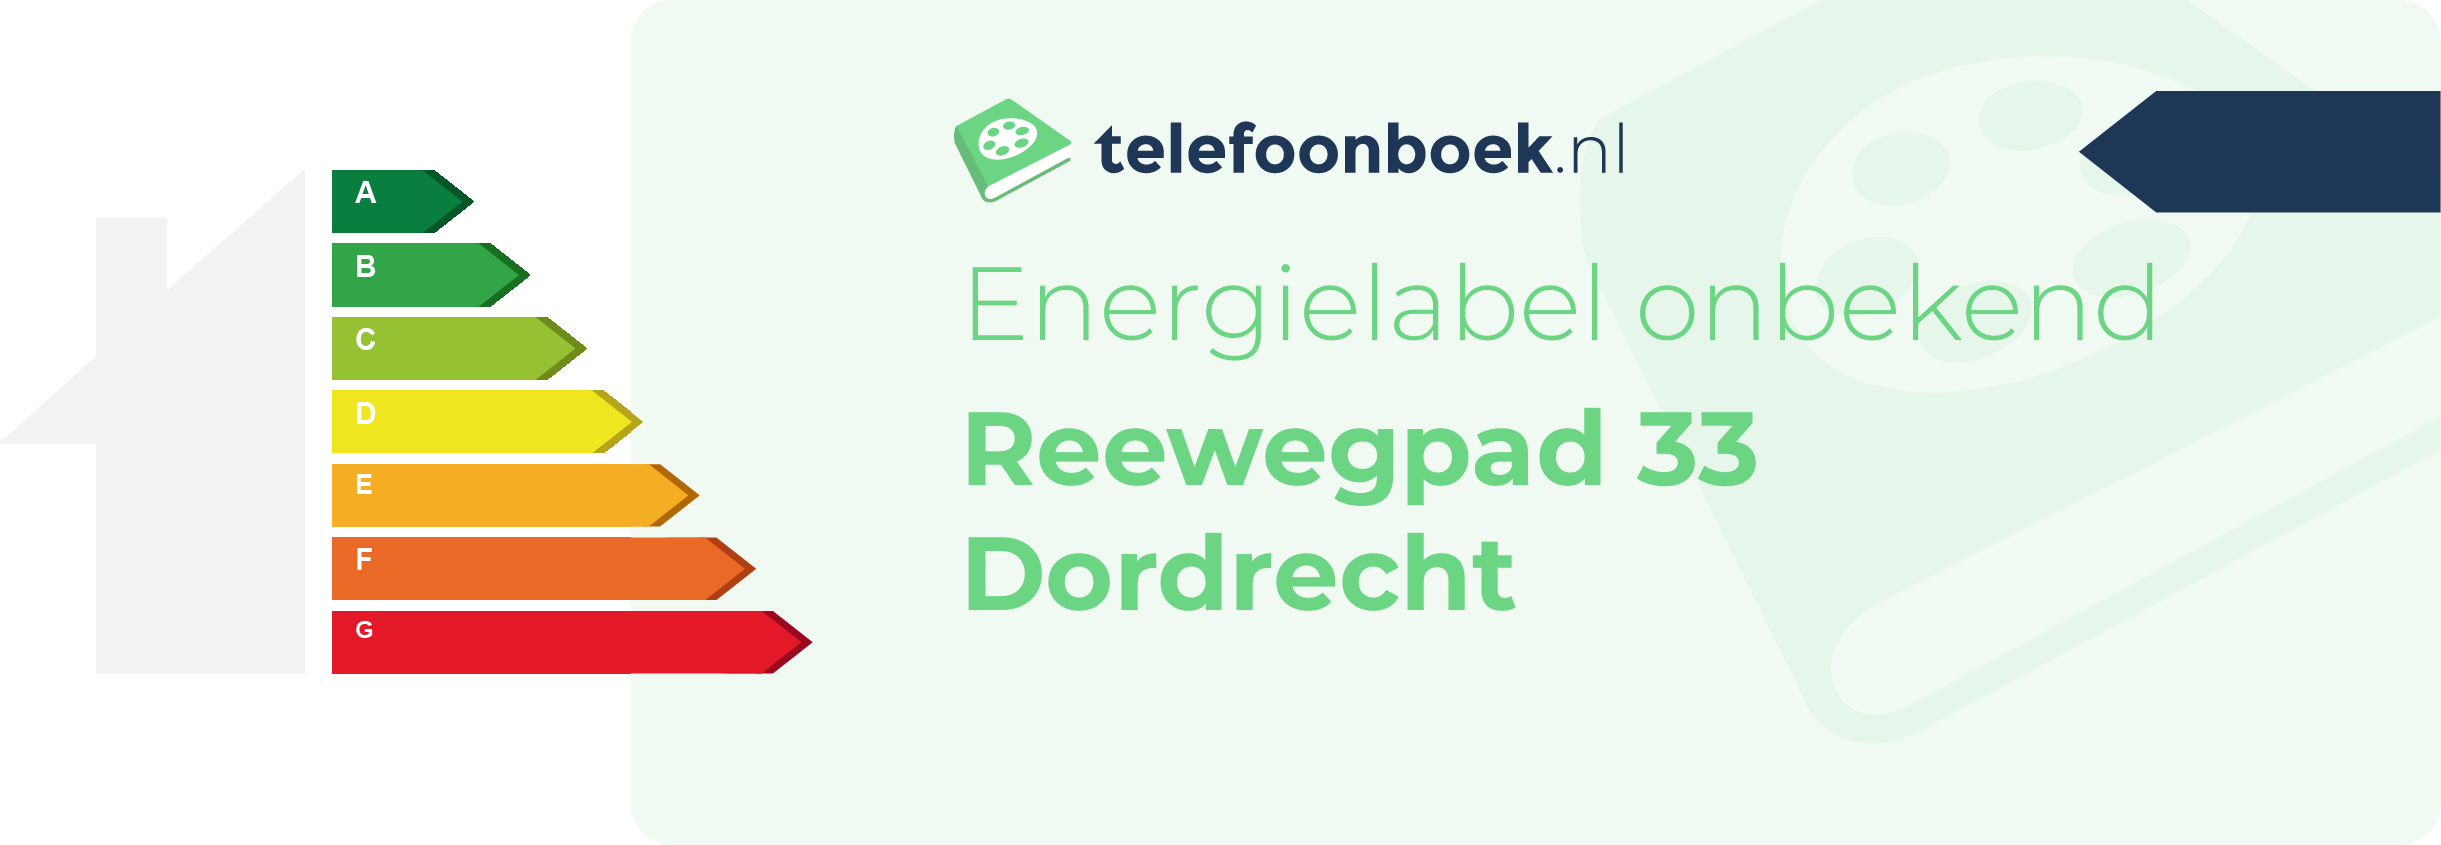 Energielabel Reewegpad 33 Dordrecht